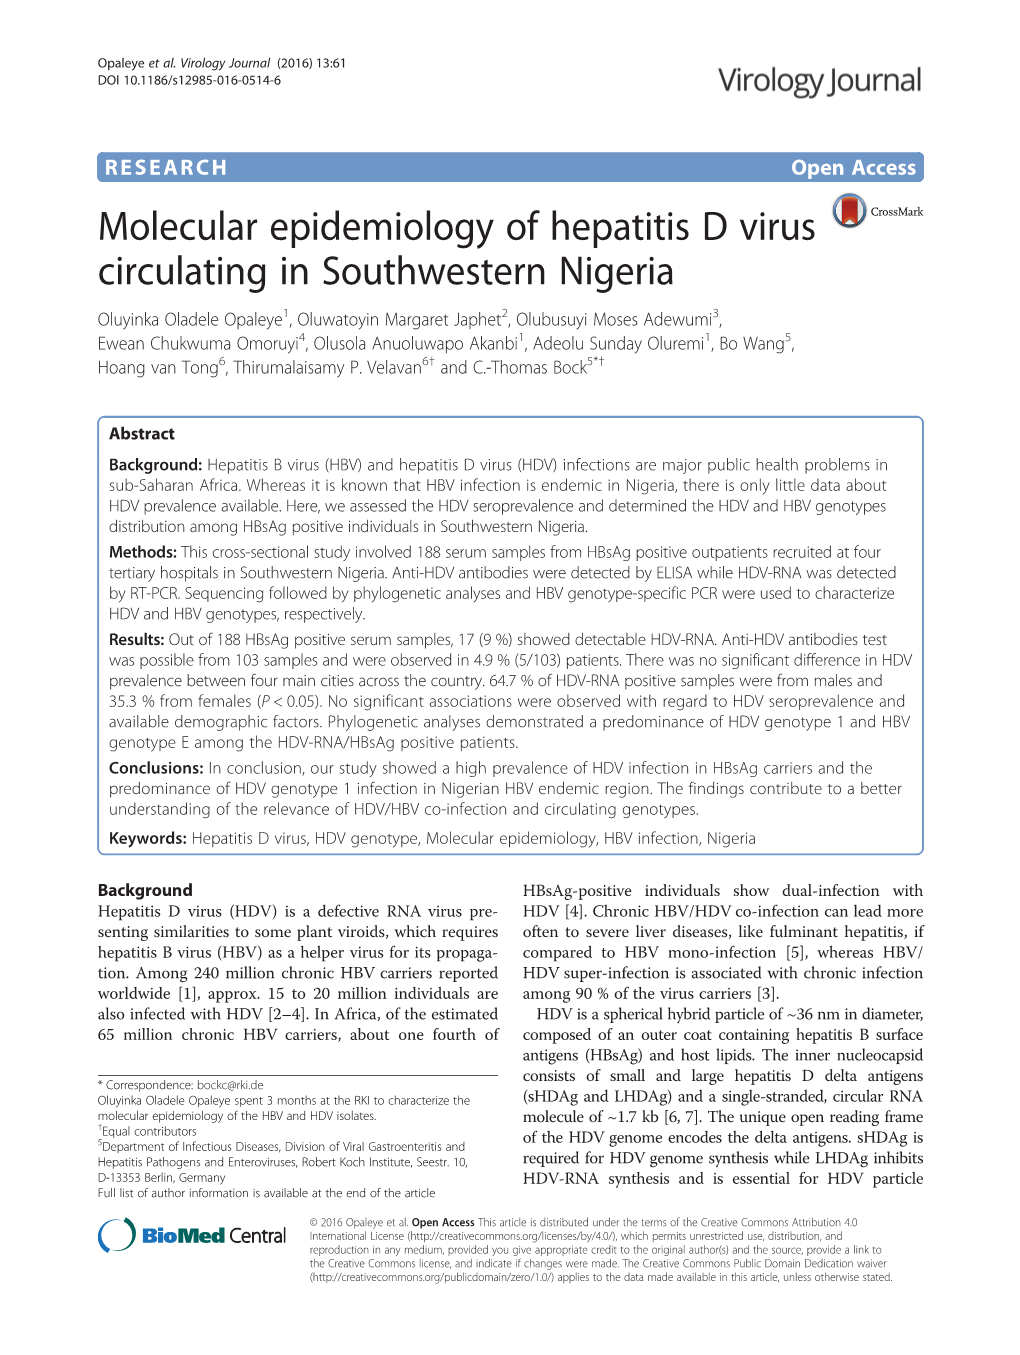 Molecular Epidemiology of Hepatitis D Virus Circulating in Southwestern